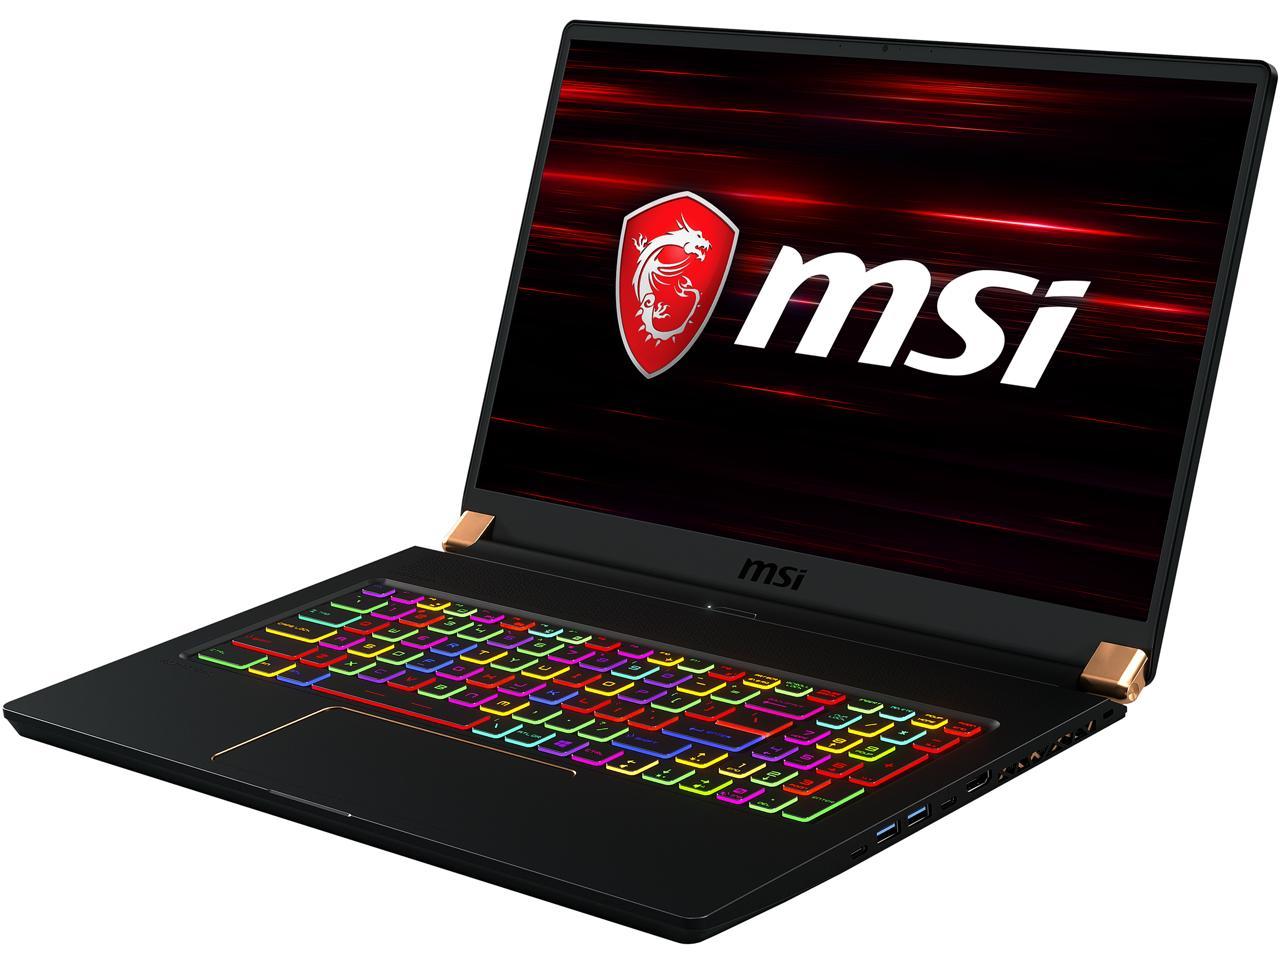 MSI GS75 Stealth 10SGS-610 - 17.3" - Intel Core i7-10875H - GeForce RTX 2080 Super Max-Q - 32 GB DDR4 - 512 GB SSD - Gaming Laptop